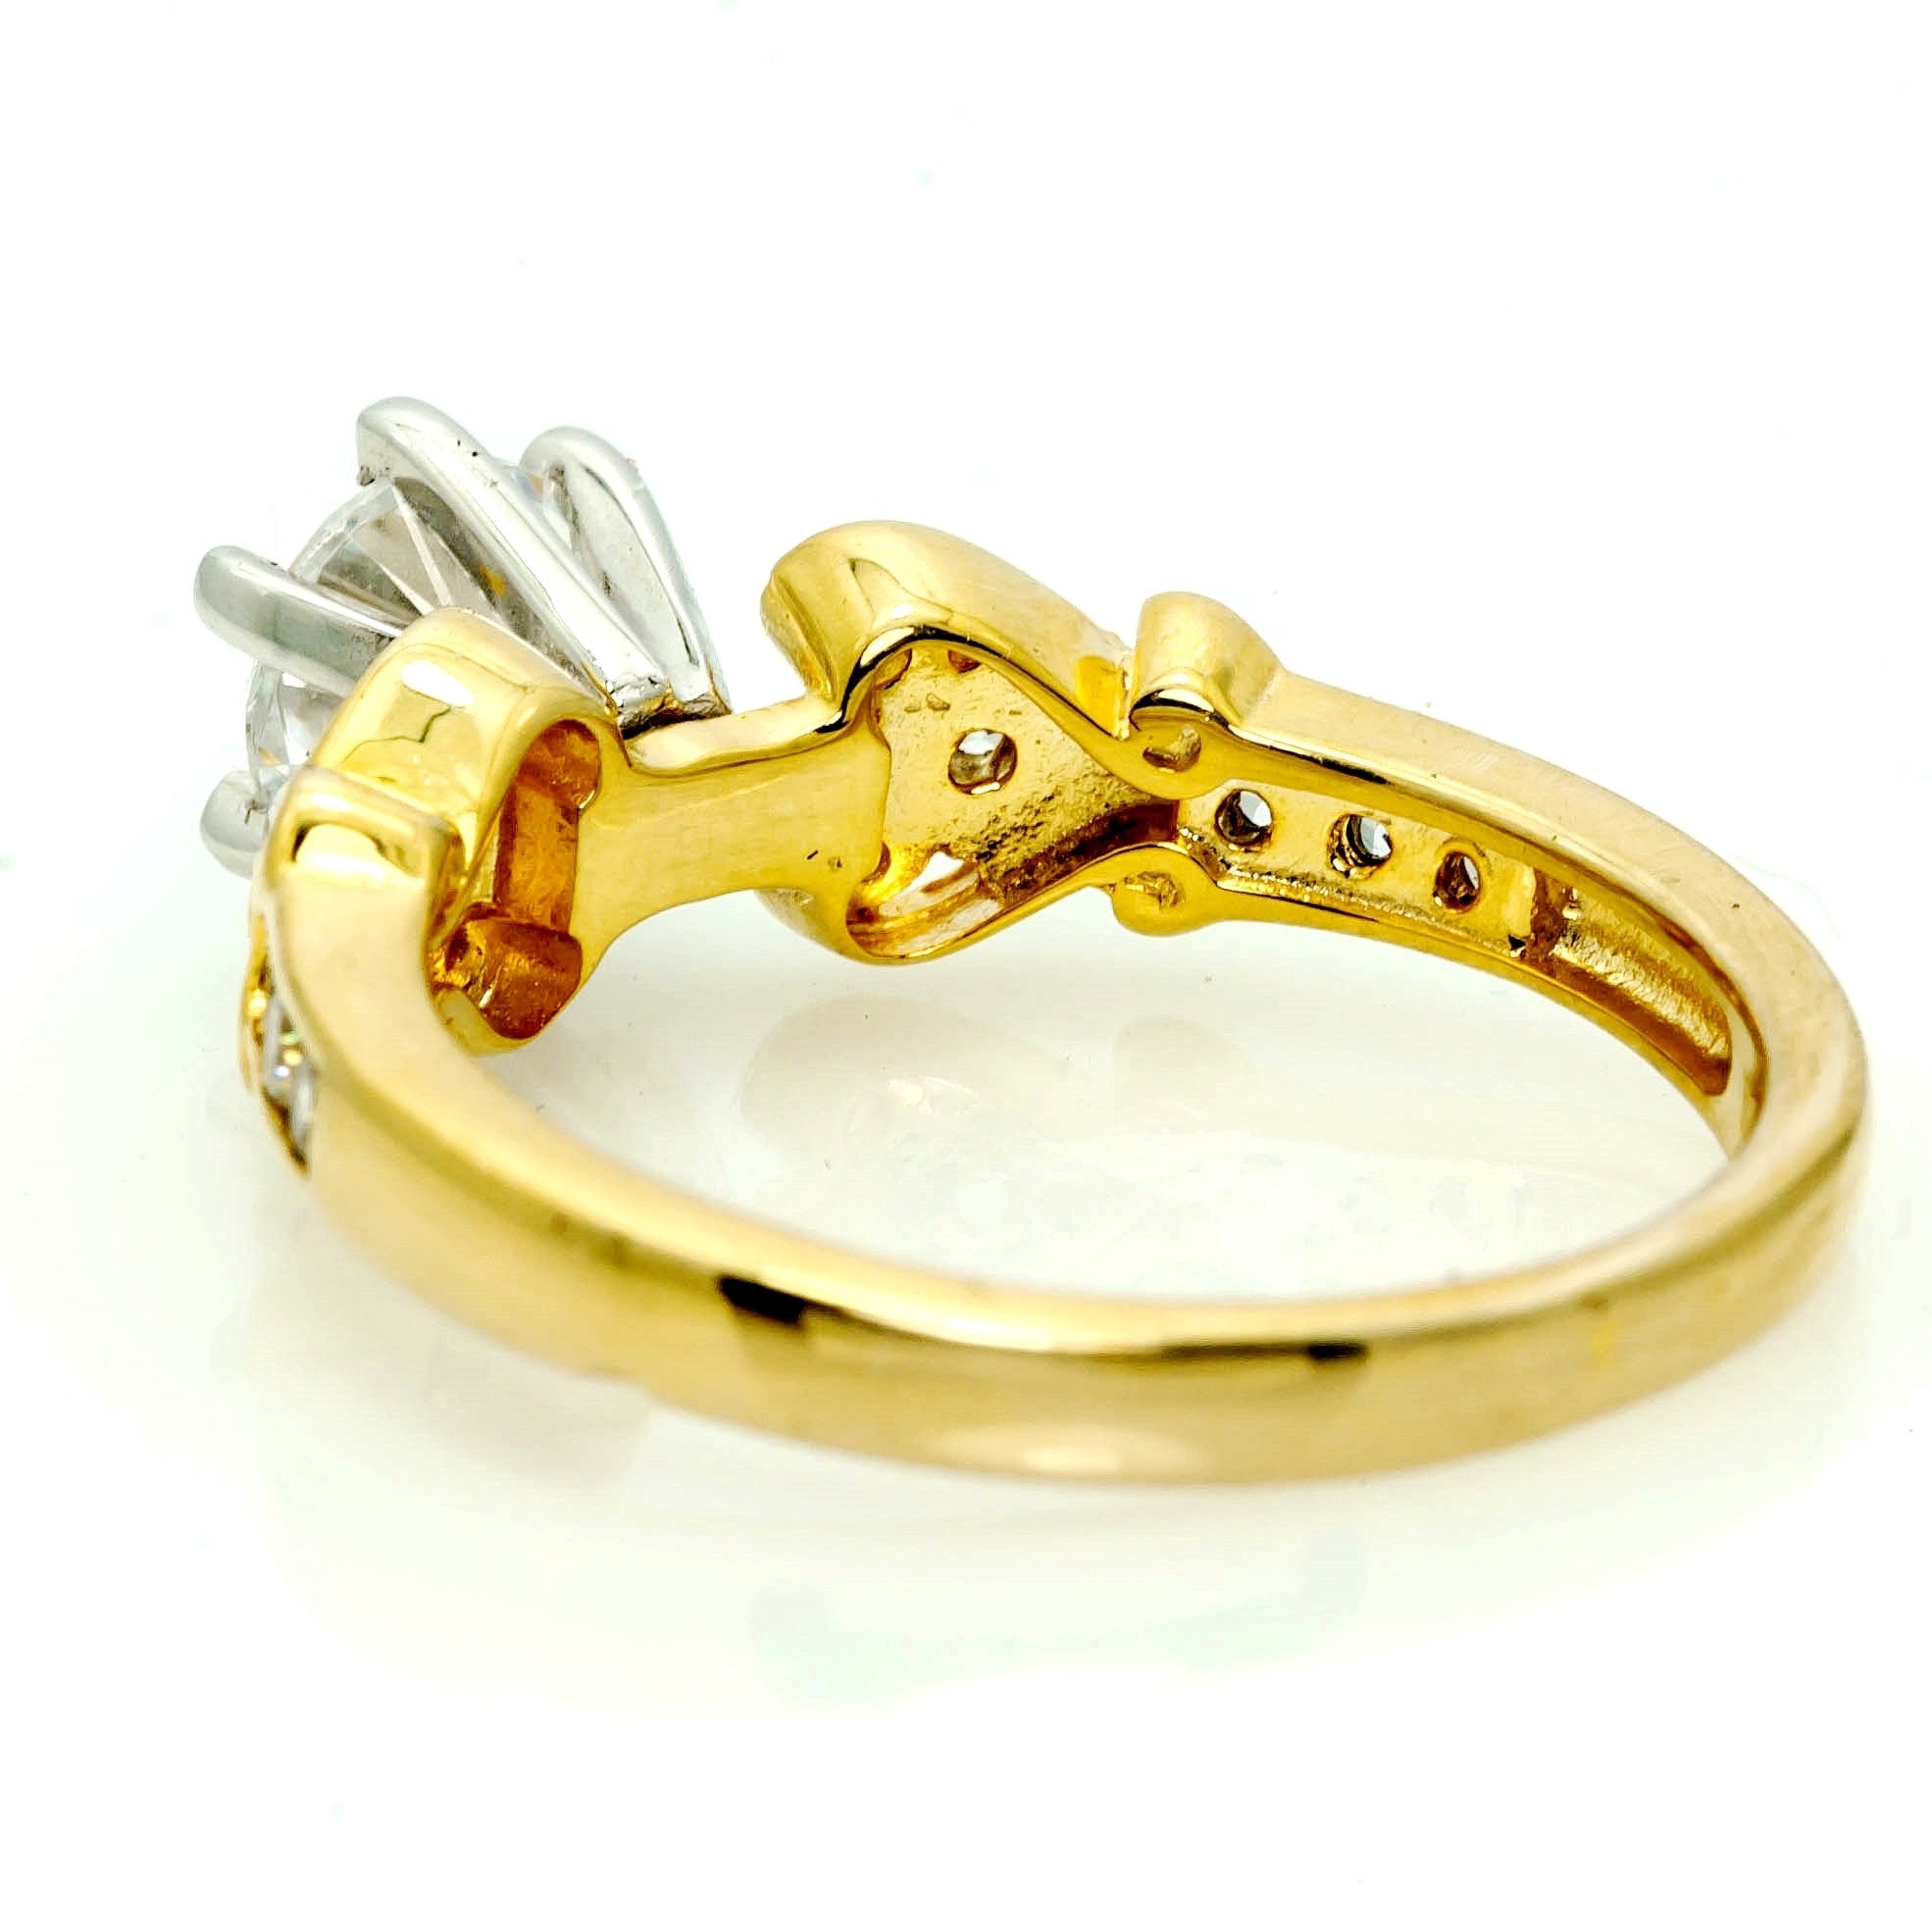 Art Deco Semi Mount Diamond Engagement Ring, Unique Solitaire  For 1 Carat Center Stone Has .26 Carat Diamonds, Anniversary Ring - Y11359